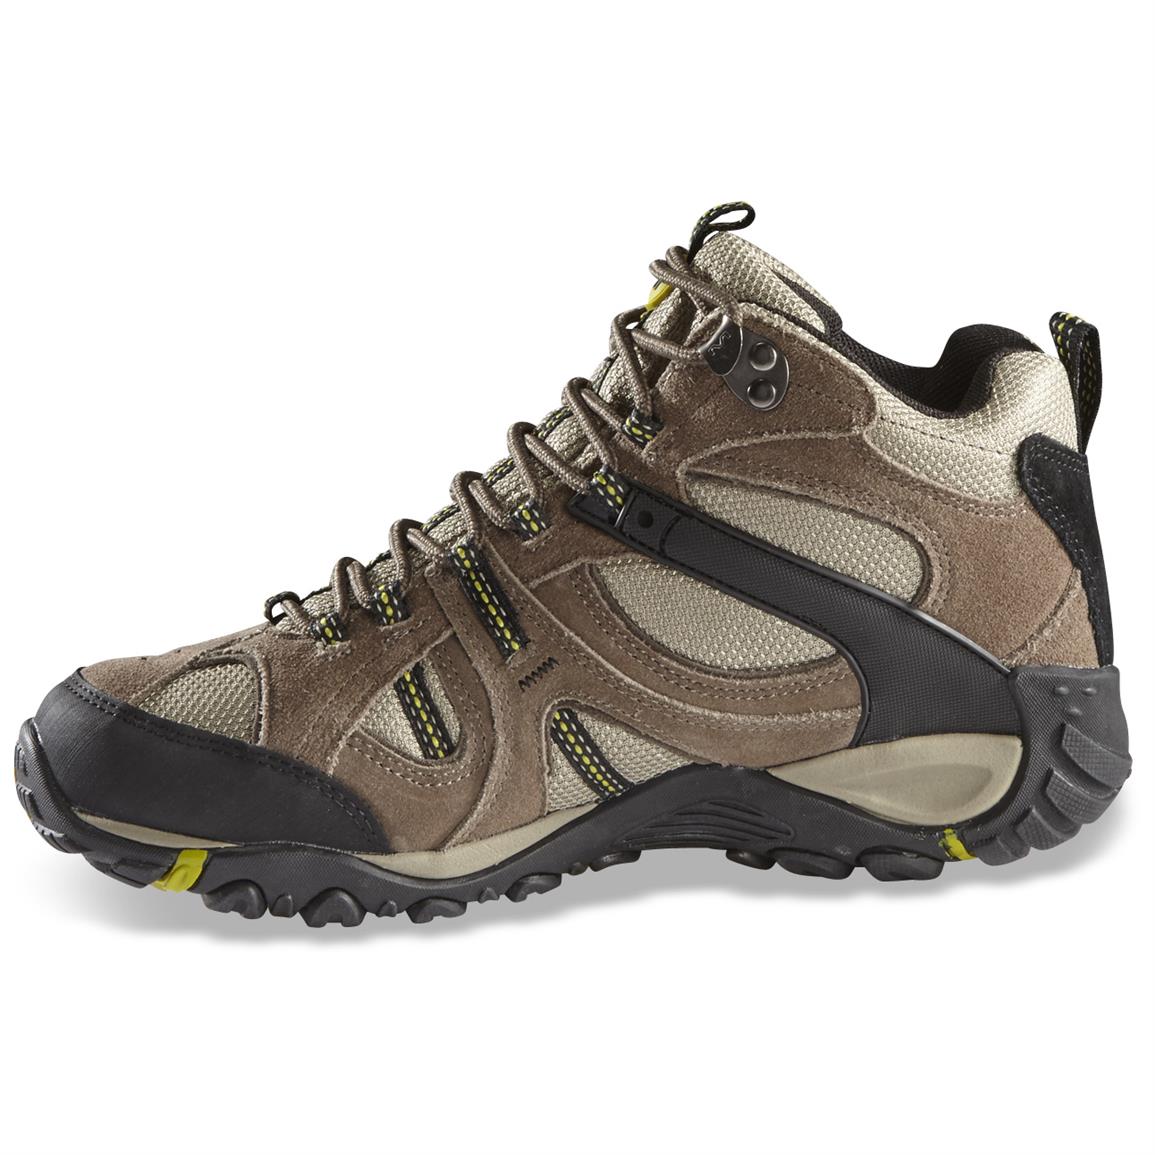 Merrell Men's Yokota Trail Mid Waterproof Hiking Shoes - 236603, Hiking ...